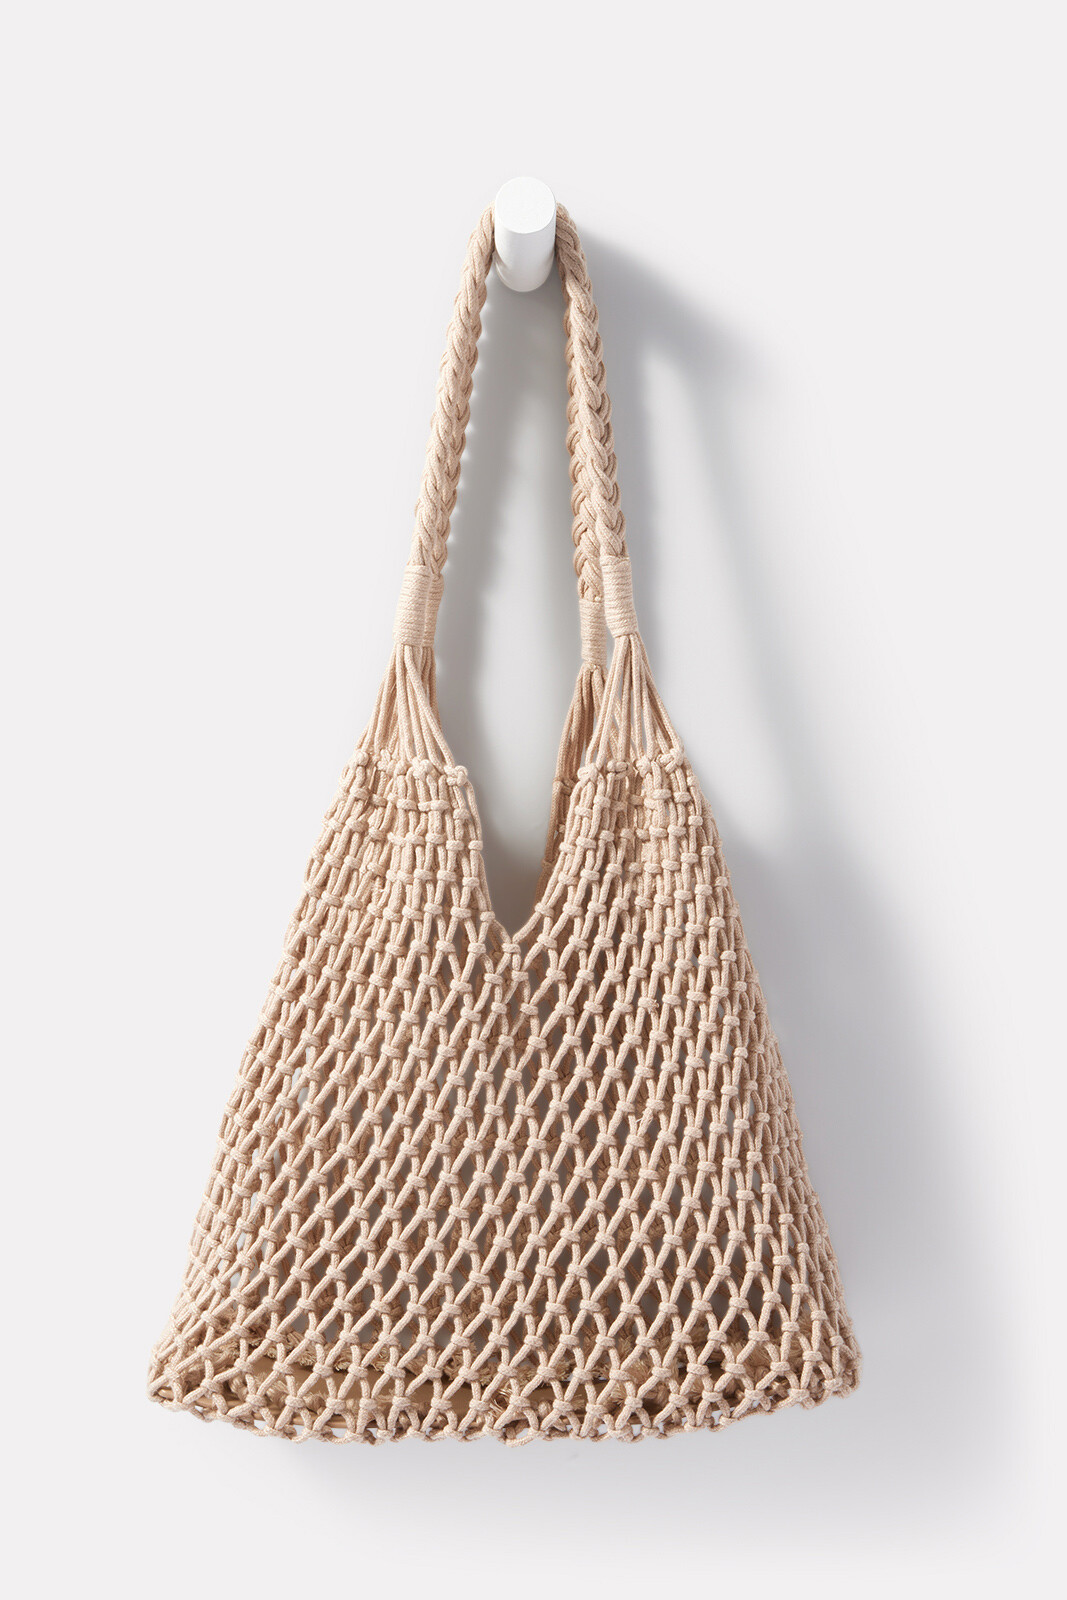 Coastal Weekender Bag - I Like Crochet